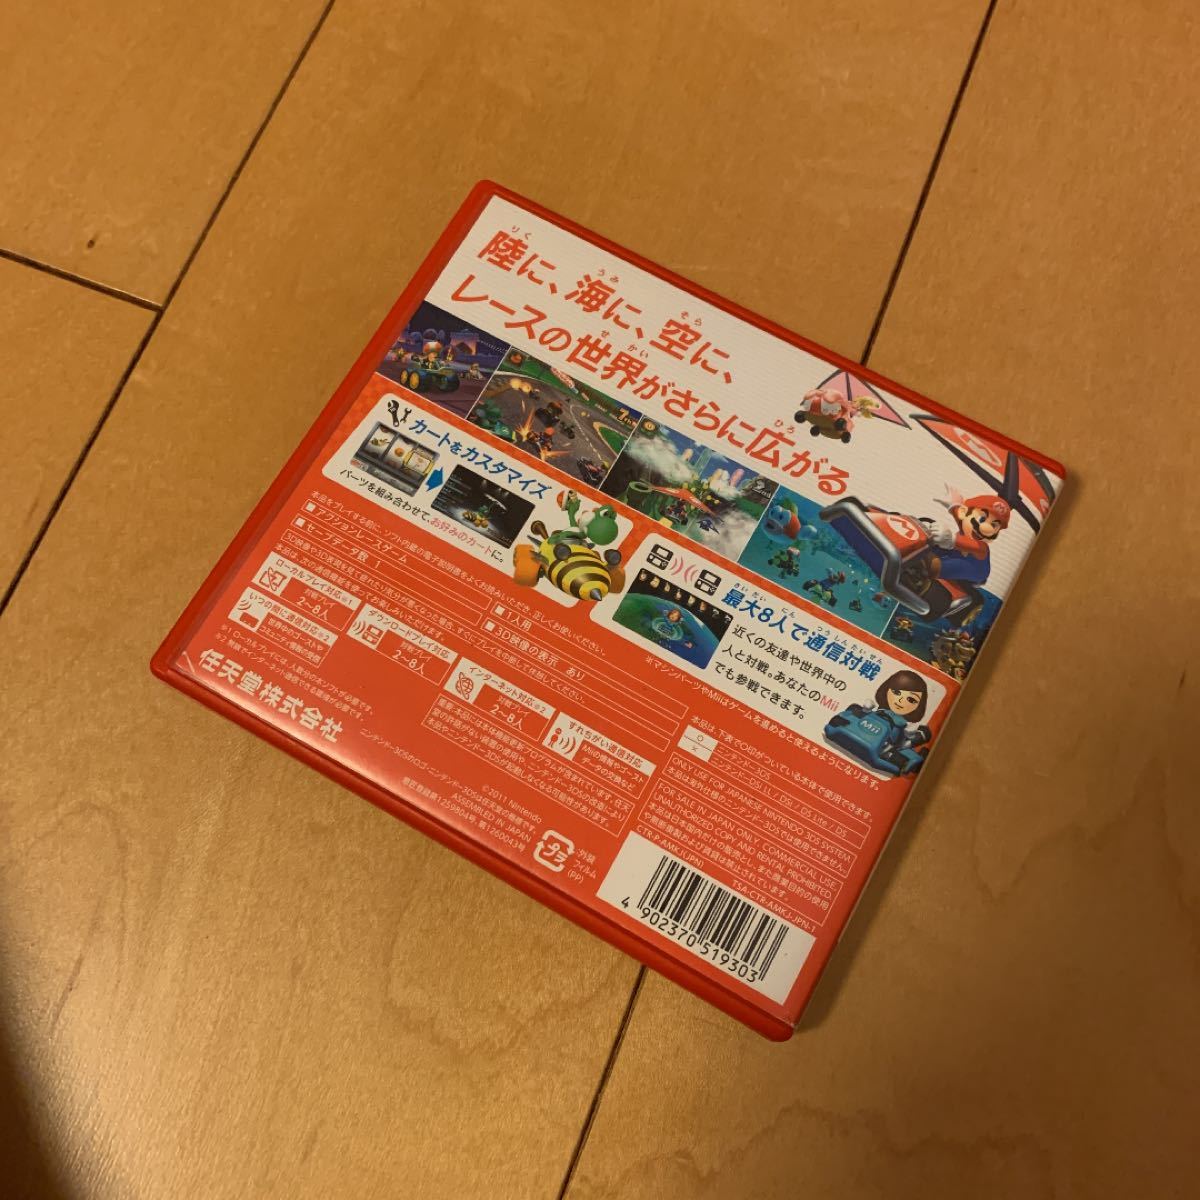 【3DS】 マリオカート7